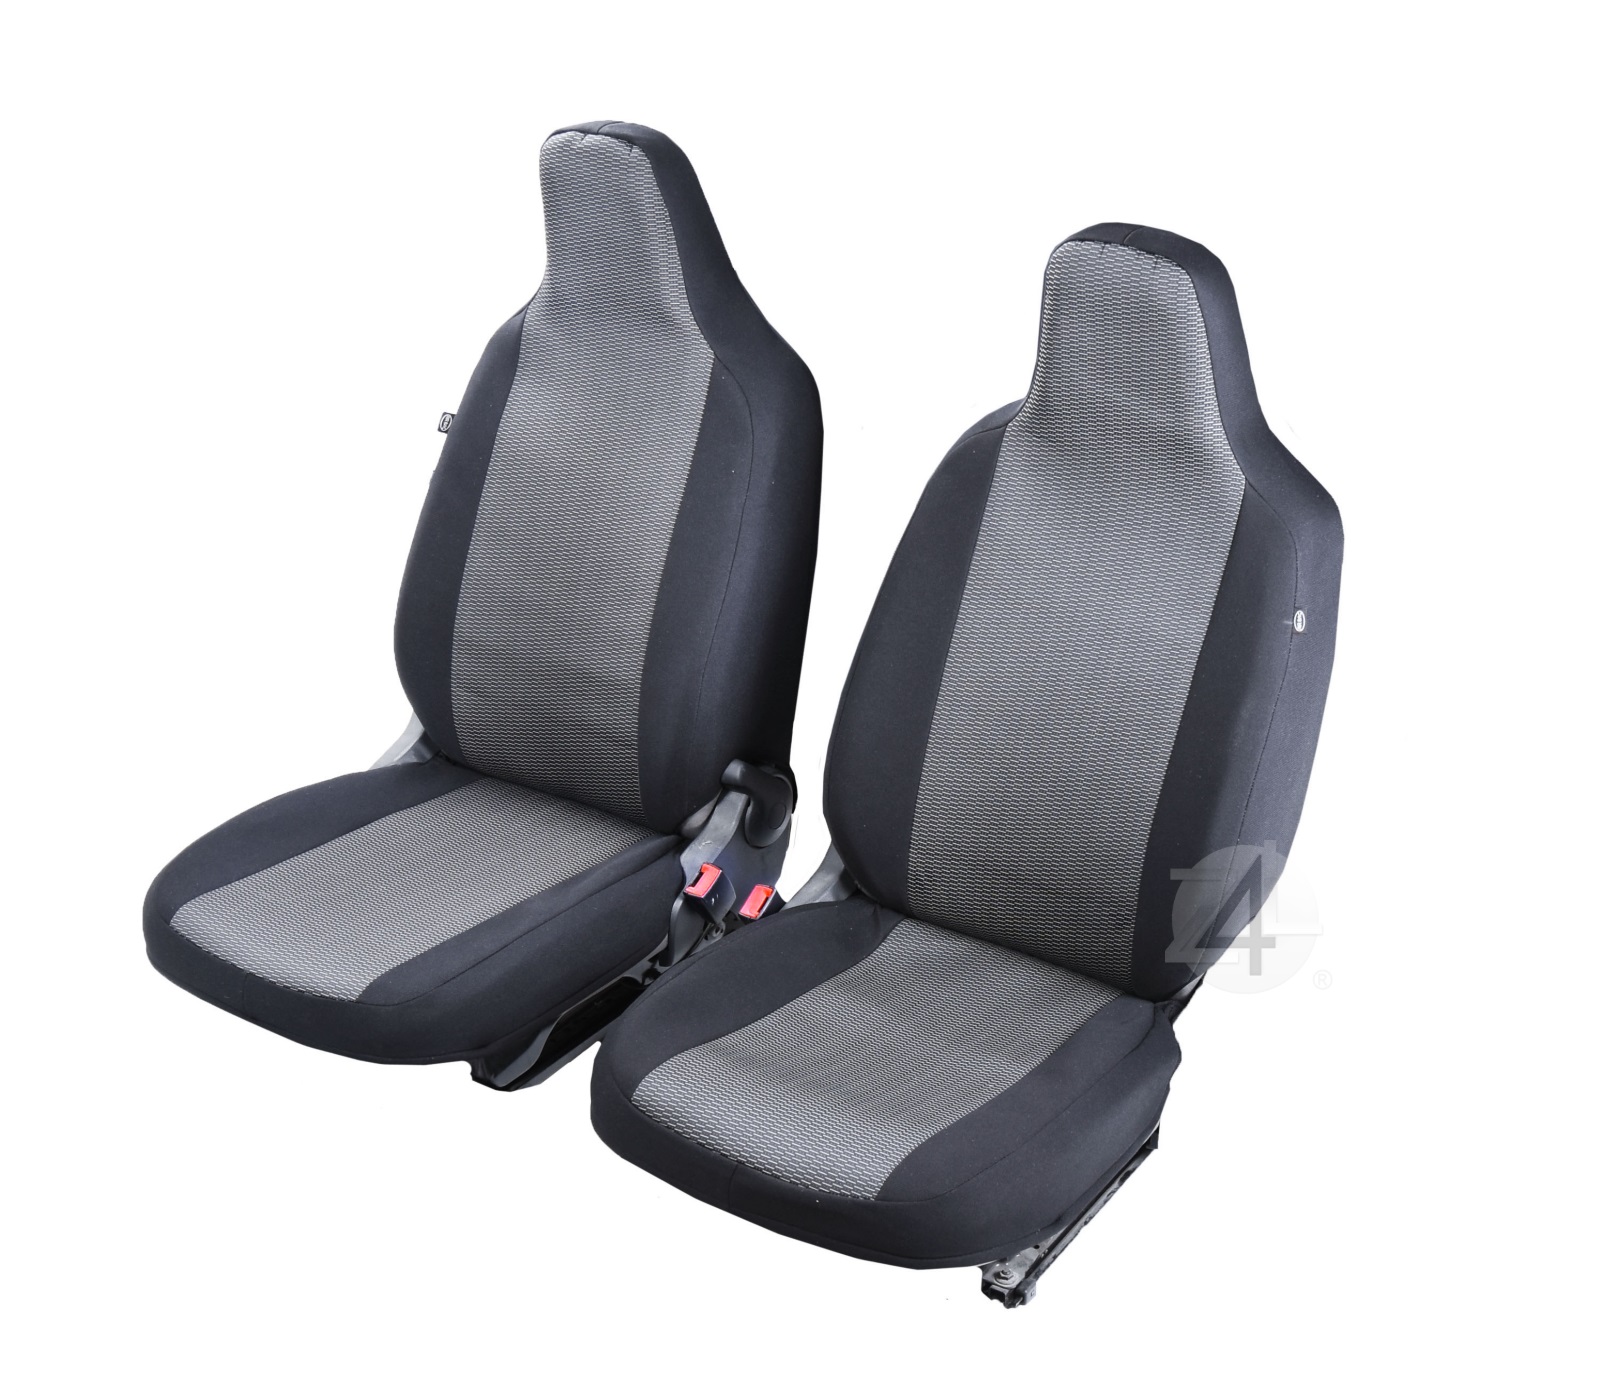 Sitzbezüge Passgenau geeignet für VW Up Seat Mii Skoda Citigo Bj